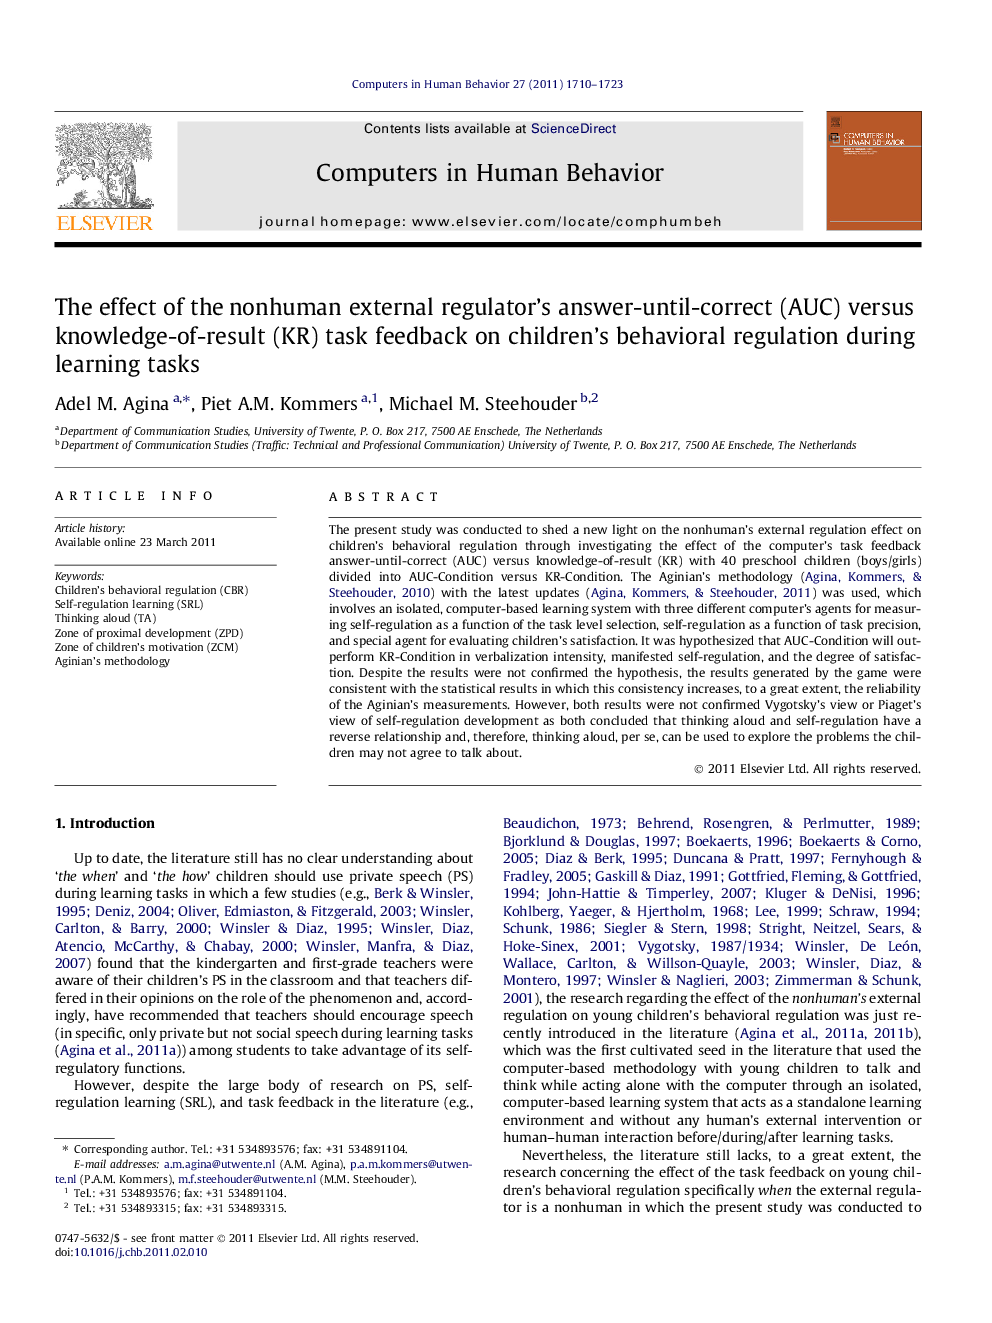 The effect of the nonhuman external regulator’s answer-until-correct (AUC) versus knowledge-of-result (KR) task feedback on children’s behavioral regulation during learning tasks